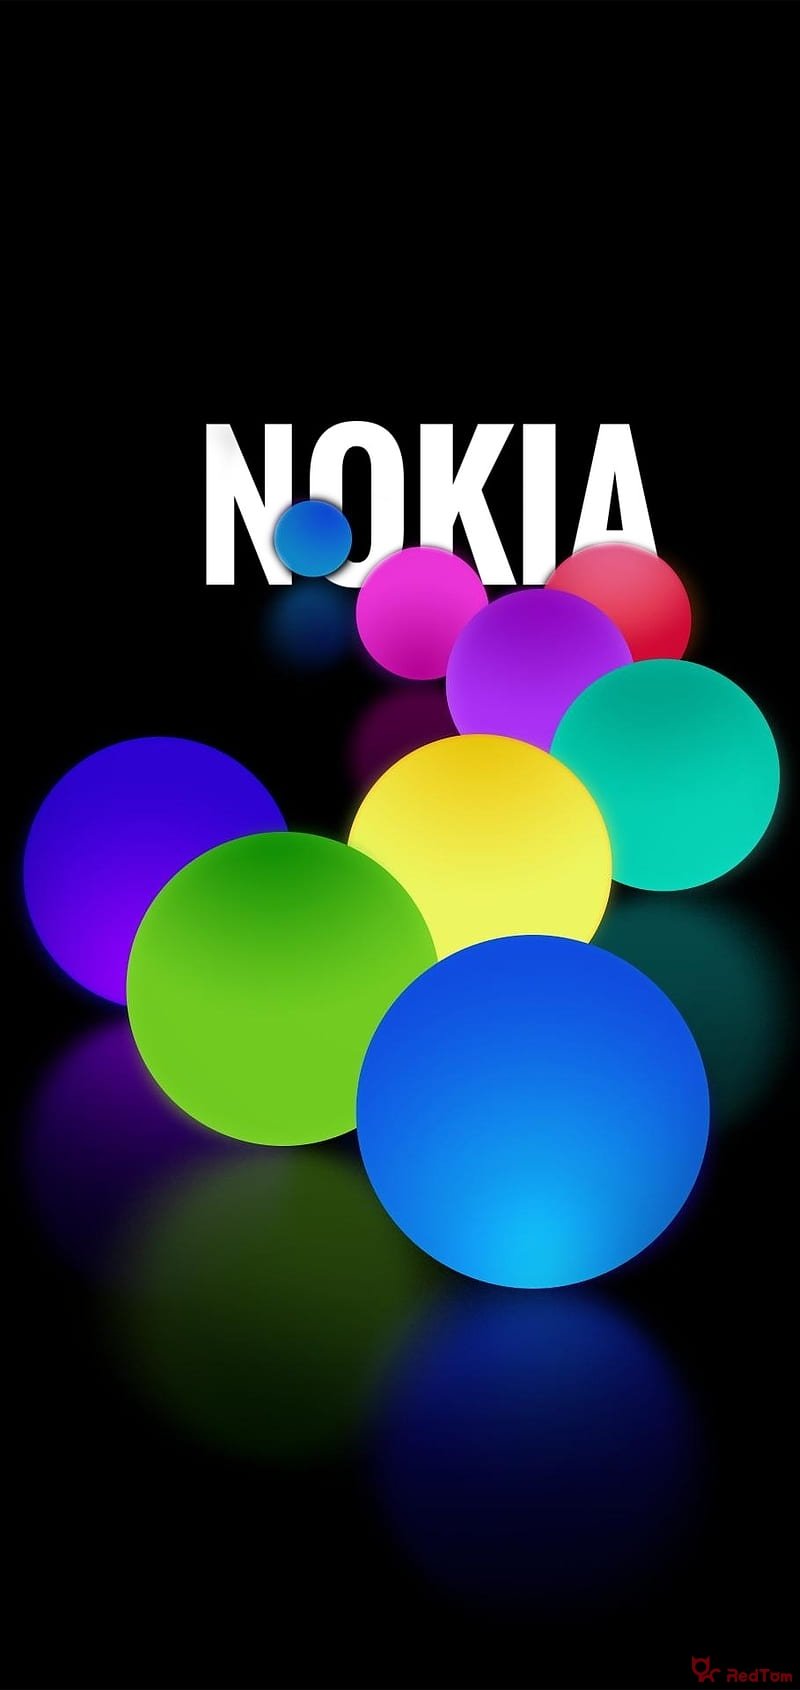 HD Nokia wallpaper: Nokia Custom WallPaper for Phone! things you like